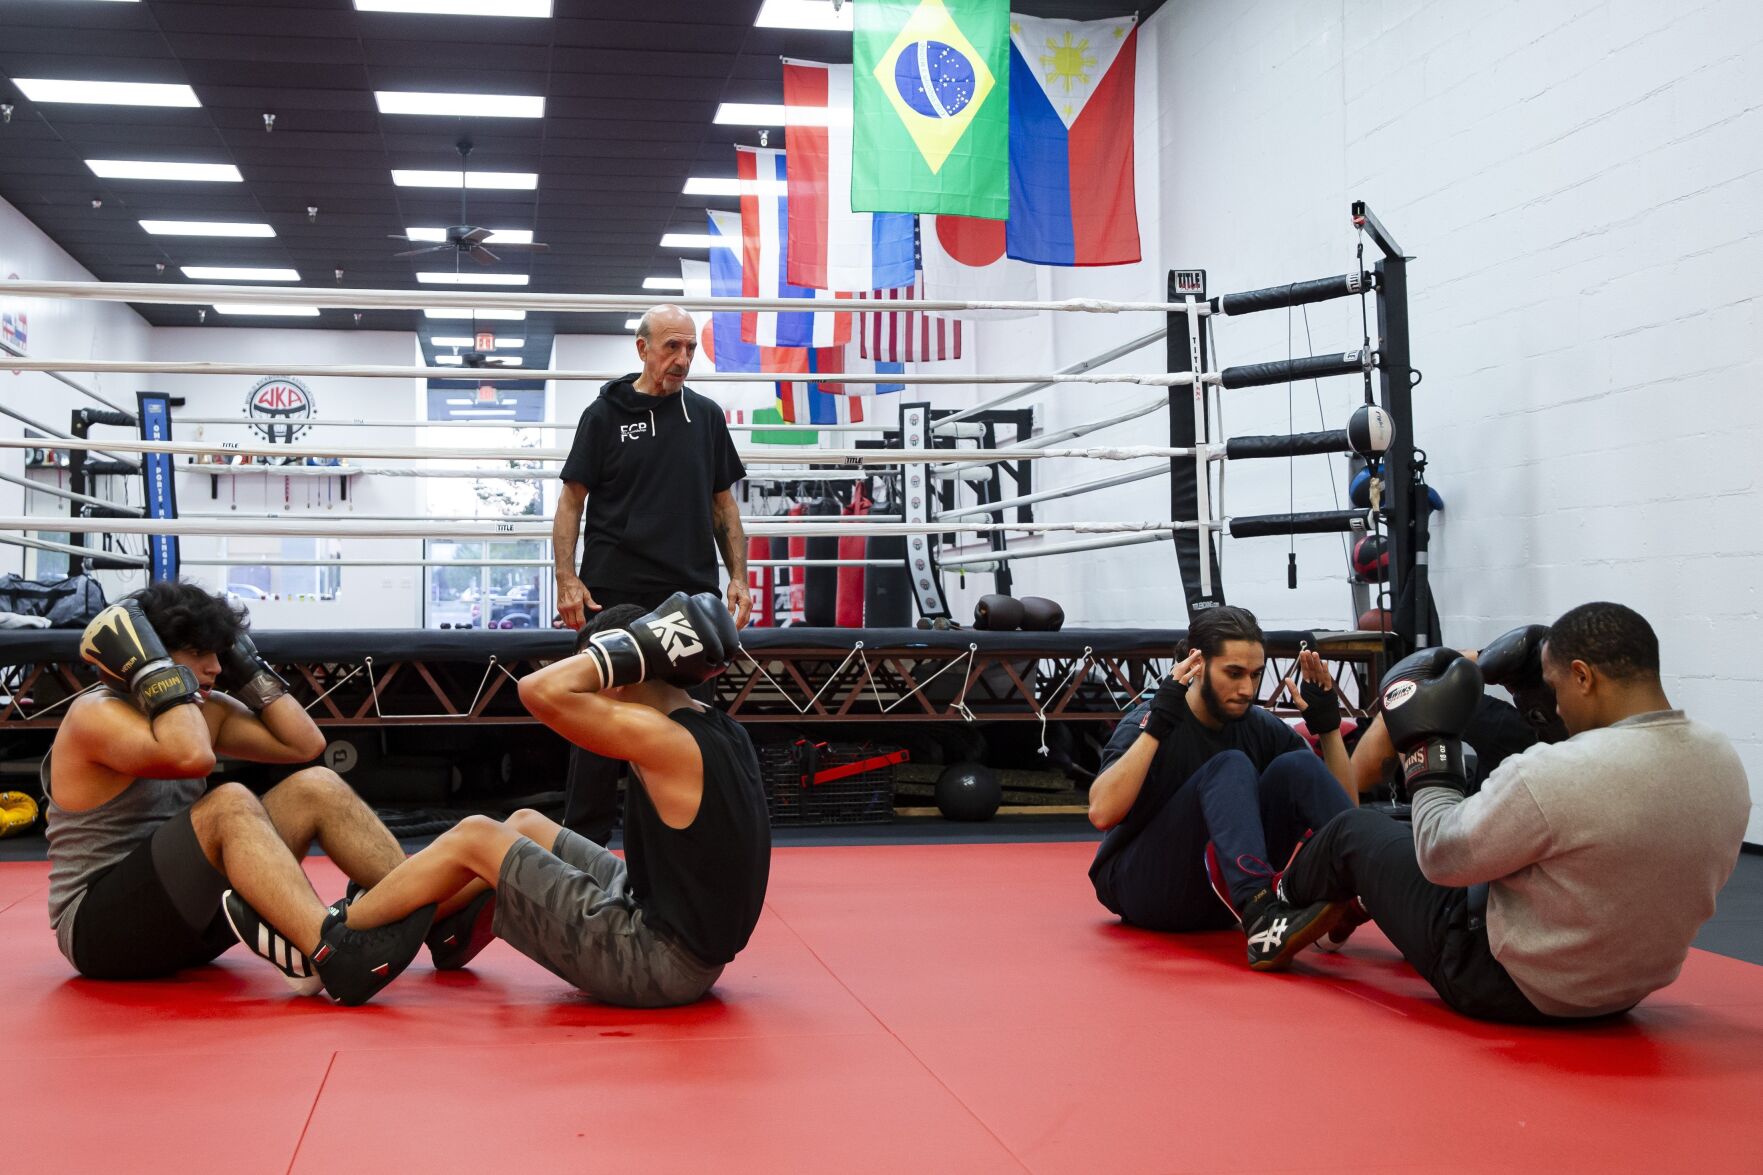 Richmond boxing coach trains amateurs, teaches life skills picture